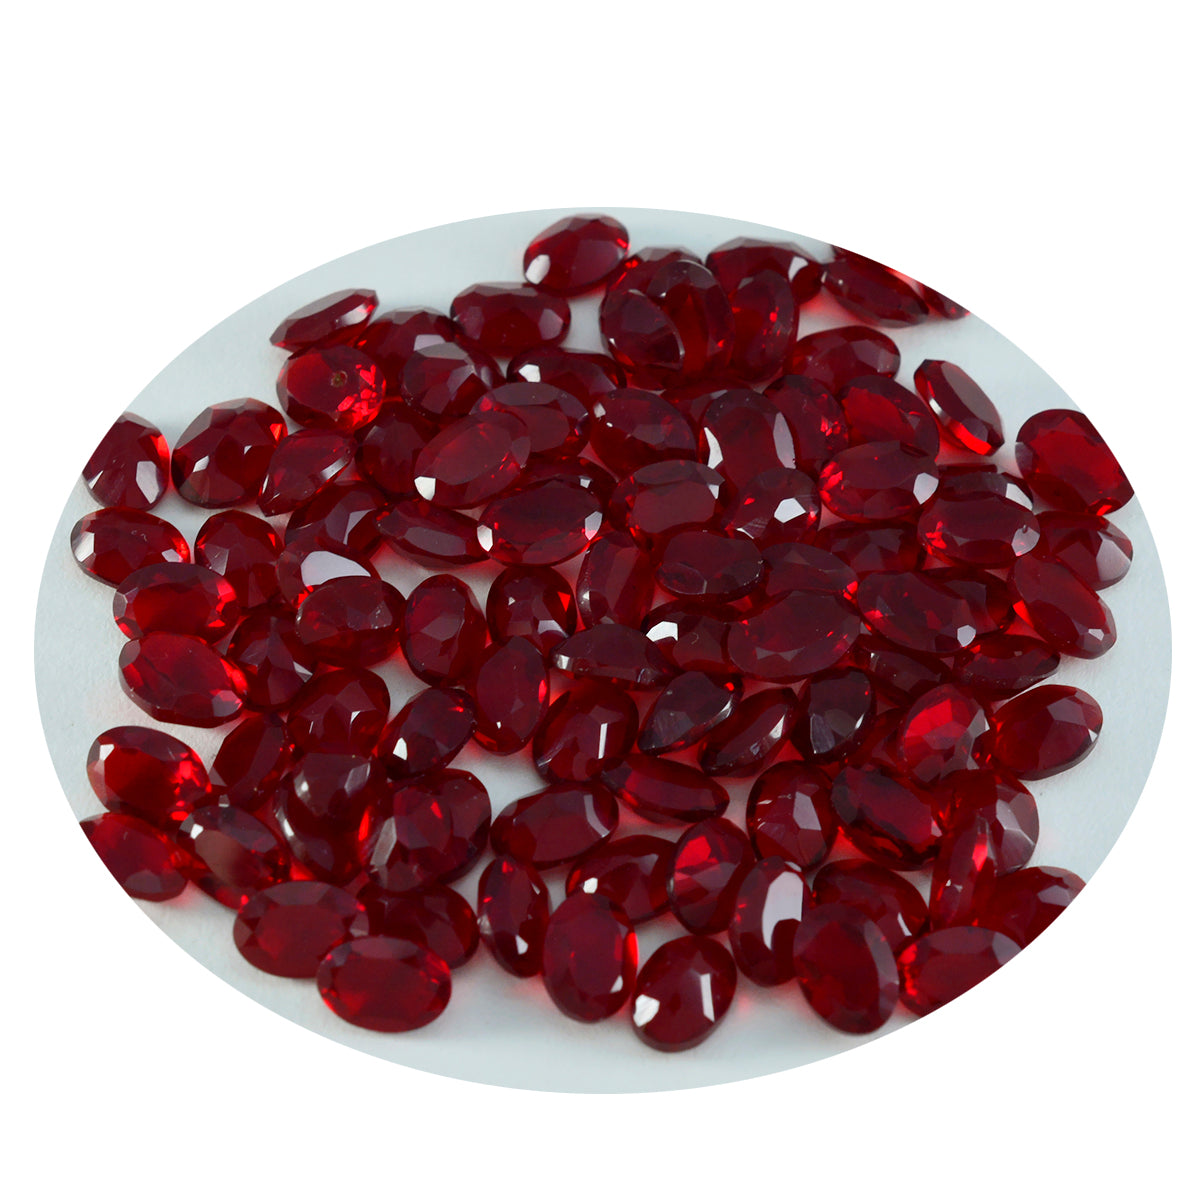 riyogems 1st röd rubin cz fasetterad 5x7 mm oval form vacker kvalitetspärla